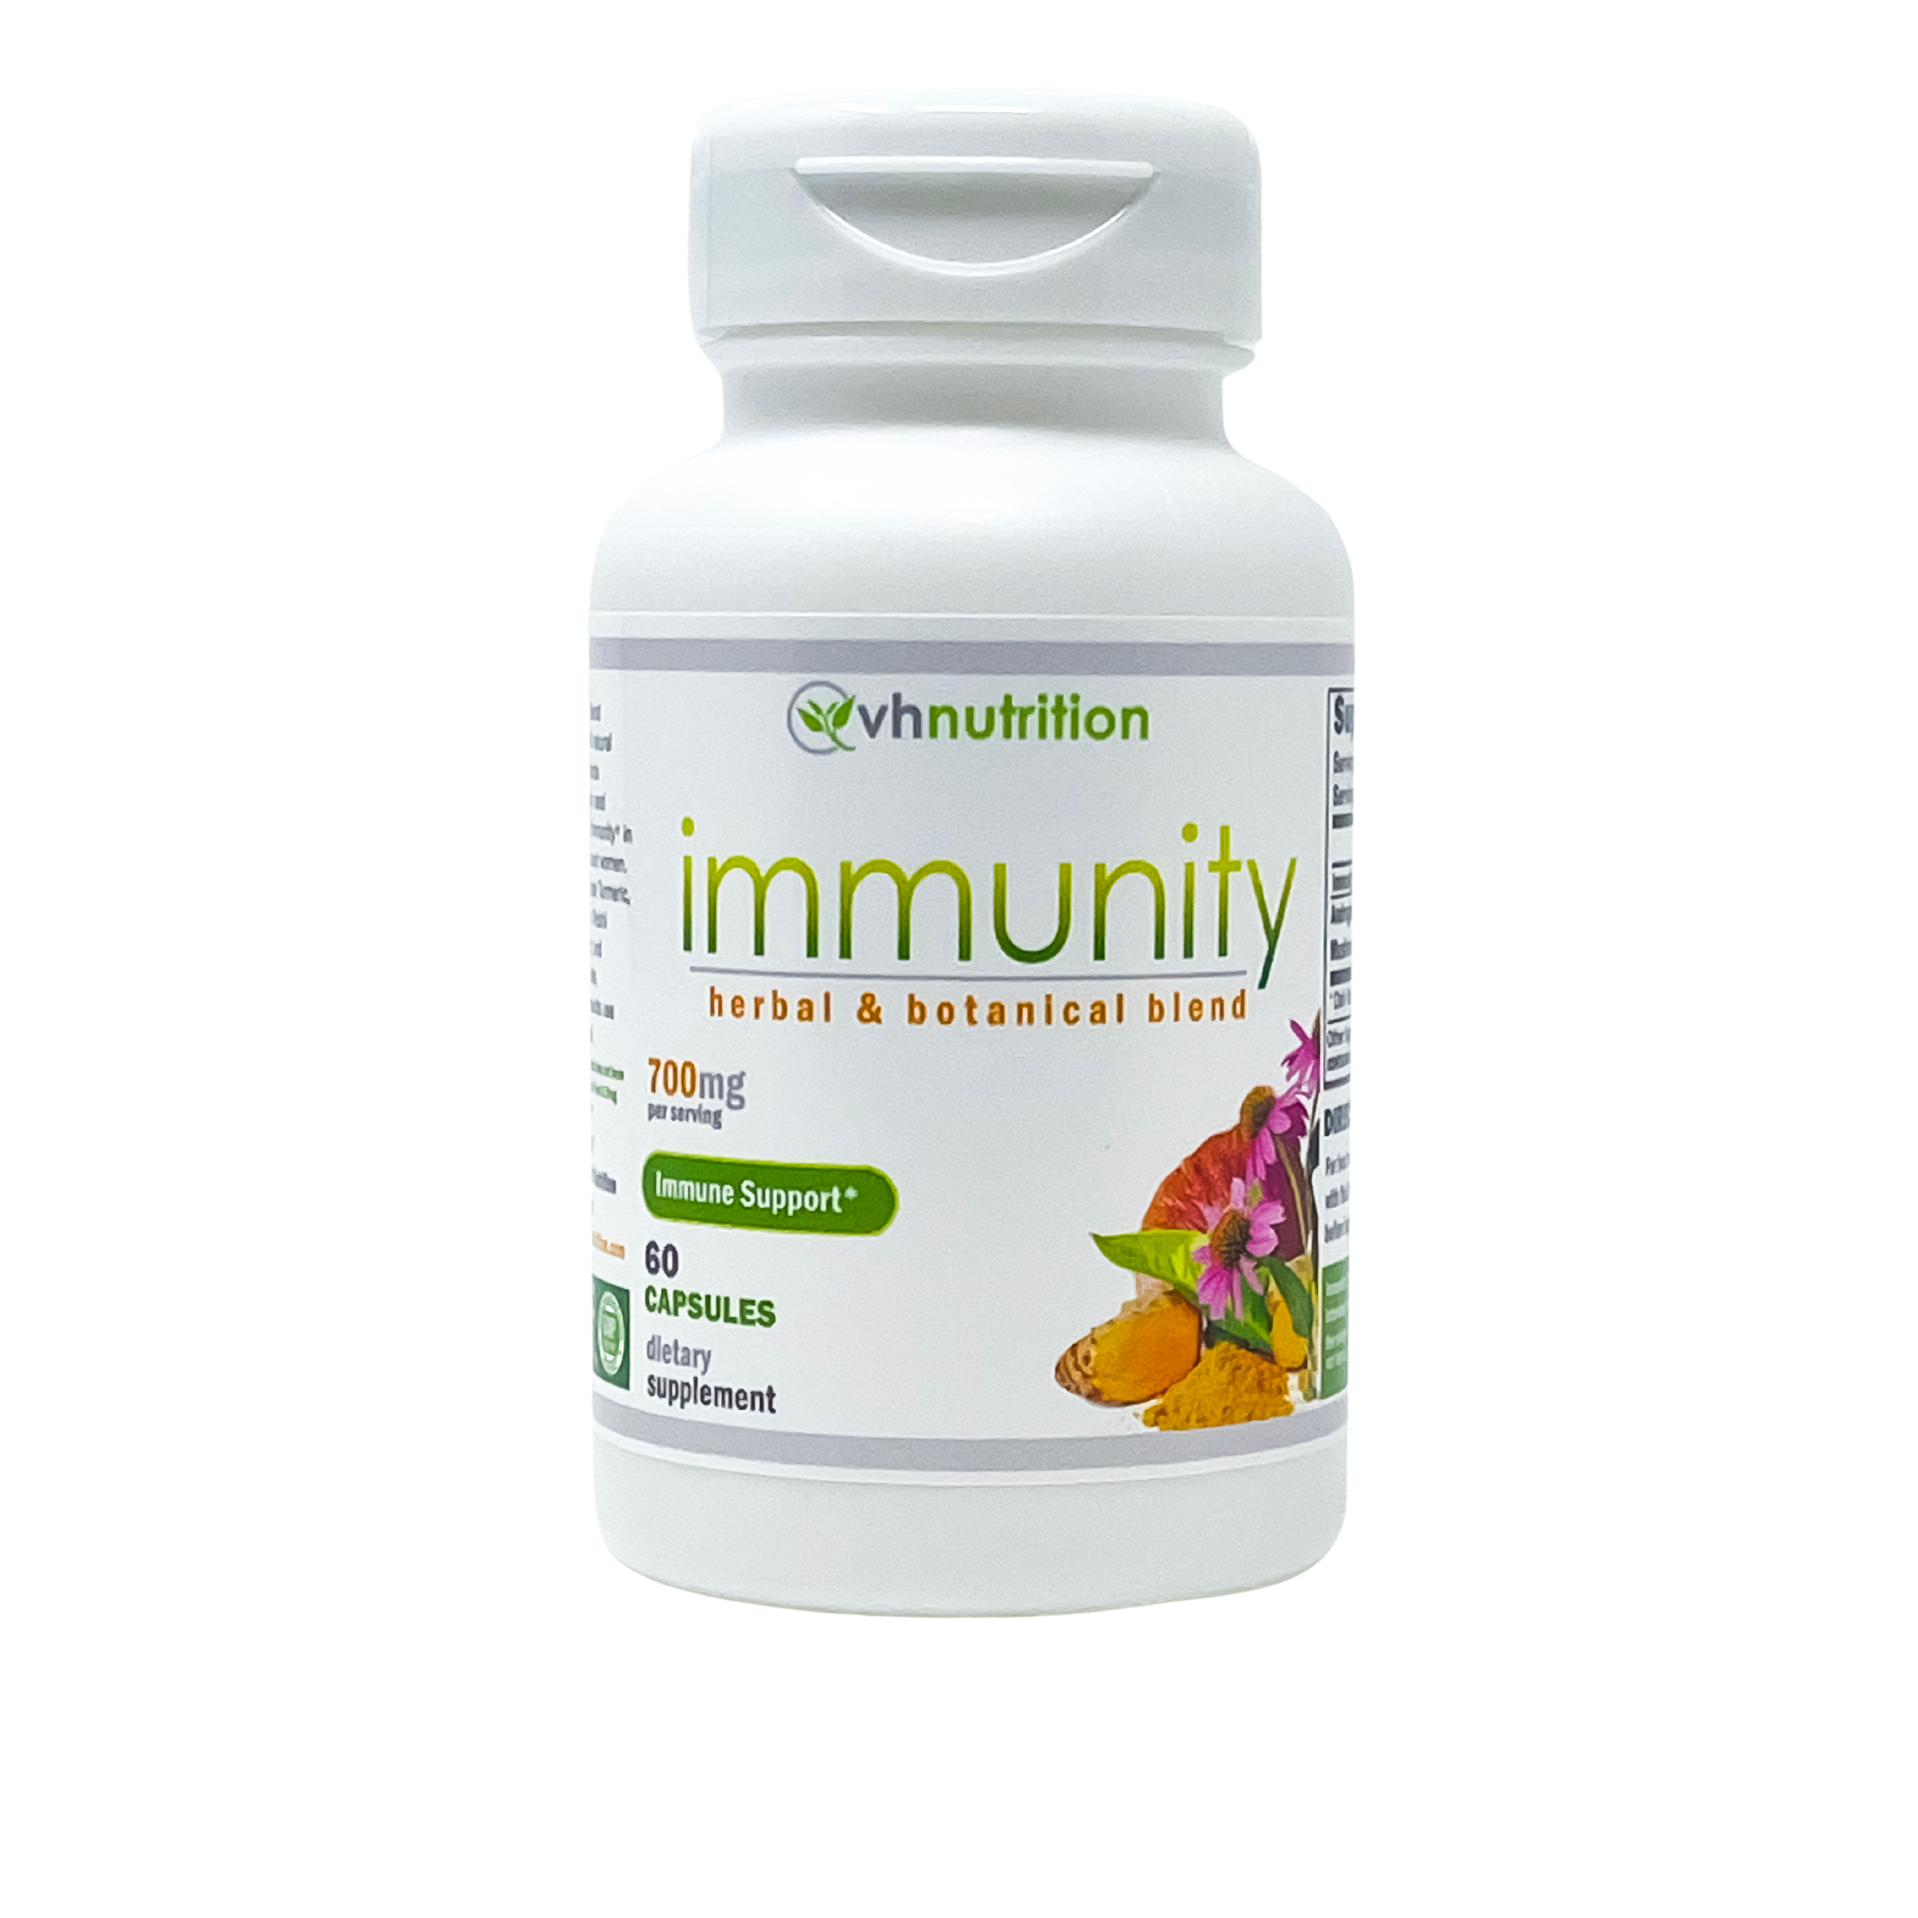 VH Nutrition IMMUNITY BLEND |  Immune Support Supplement for Men & Women* | 700mg per serving 60 Capsules | Standardized Herbal Extract Blend